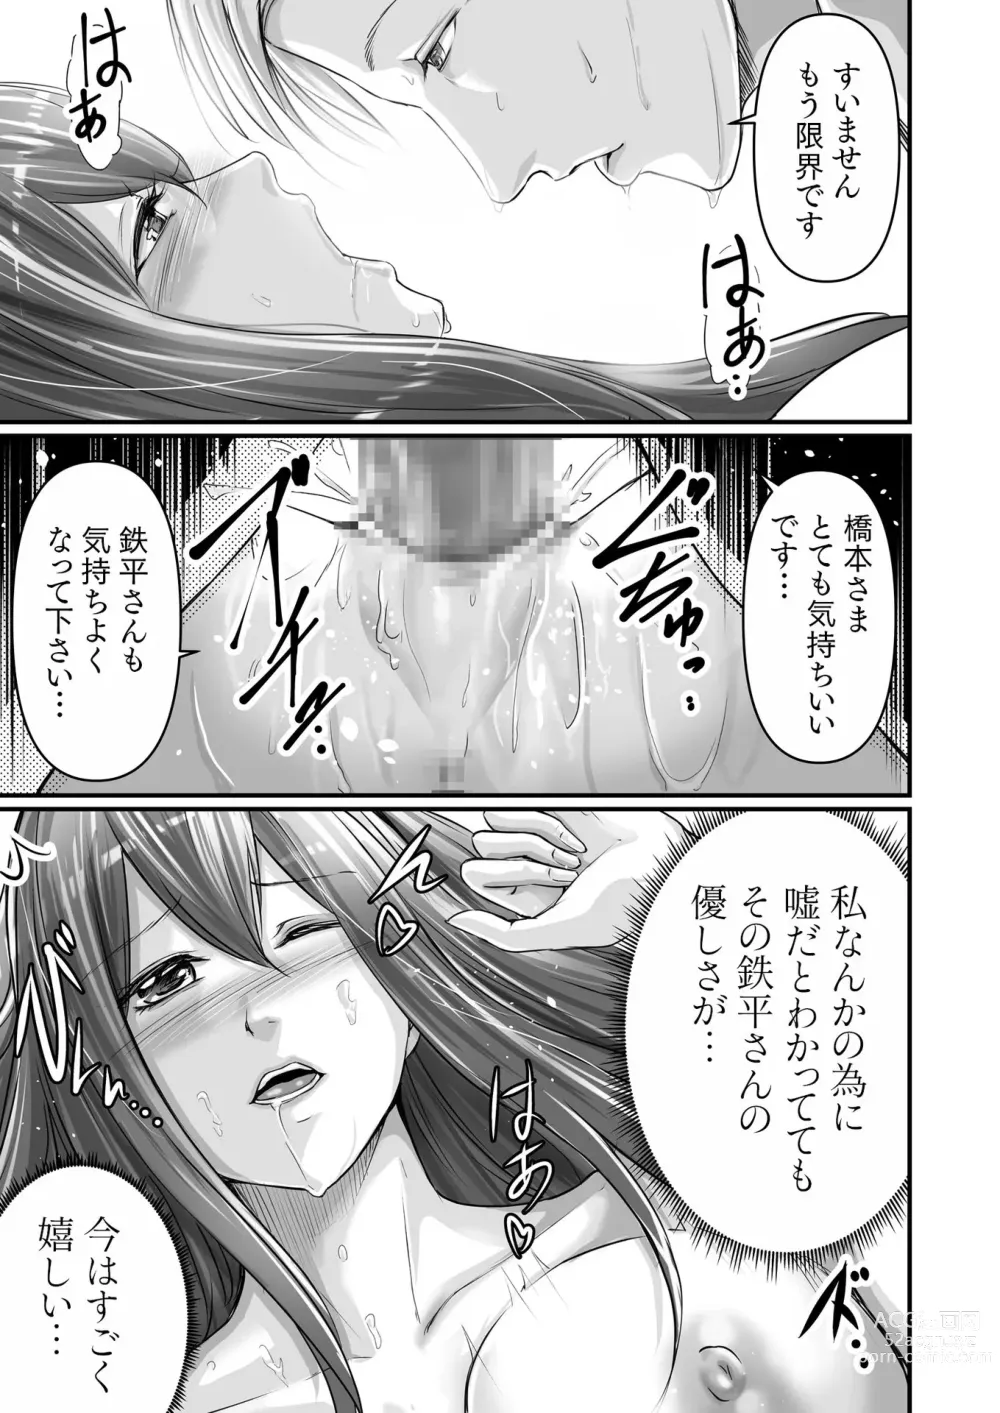 Page 27 of manga [Aoi Sena) Ryokan no hitotoki